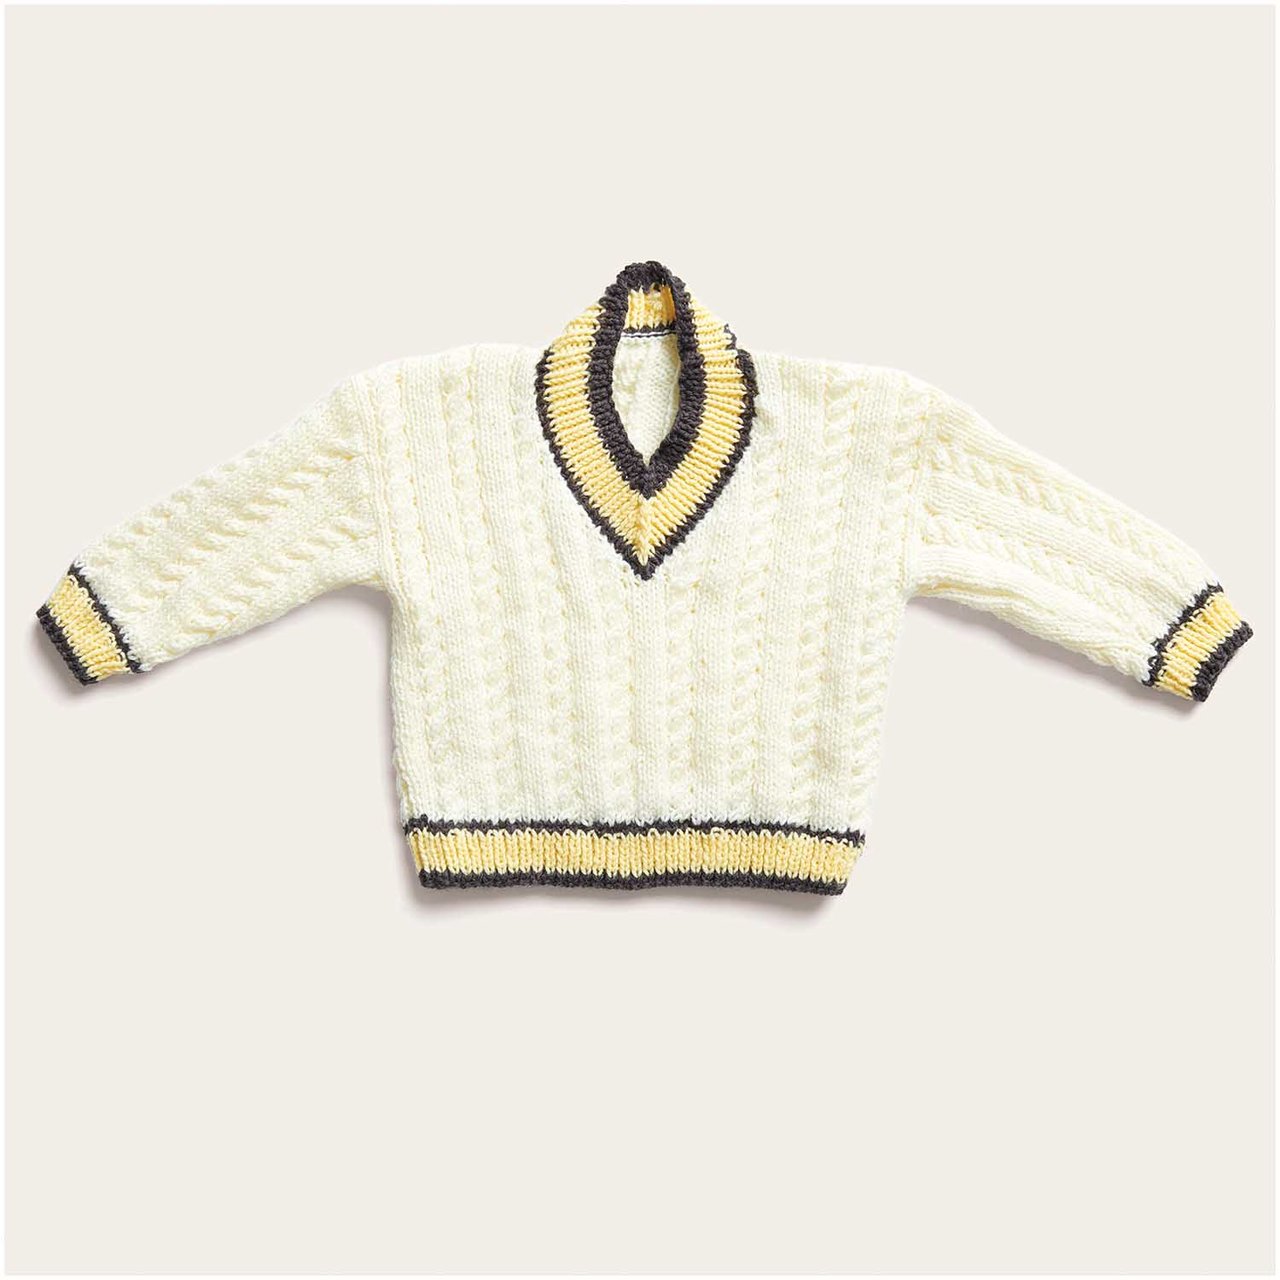 Strickset Pullover Modell 01 aus Baby Nr. 34 92/98